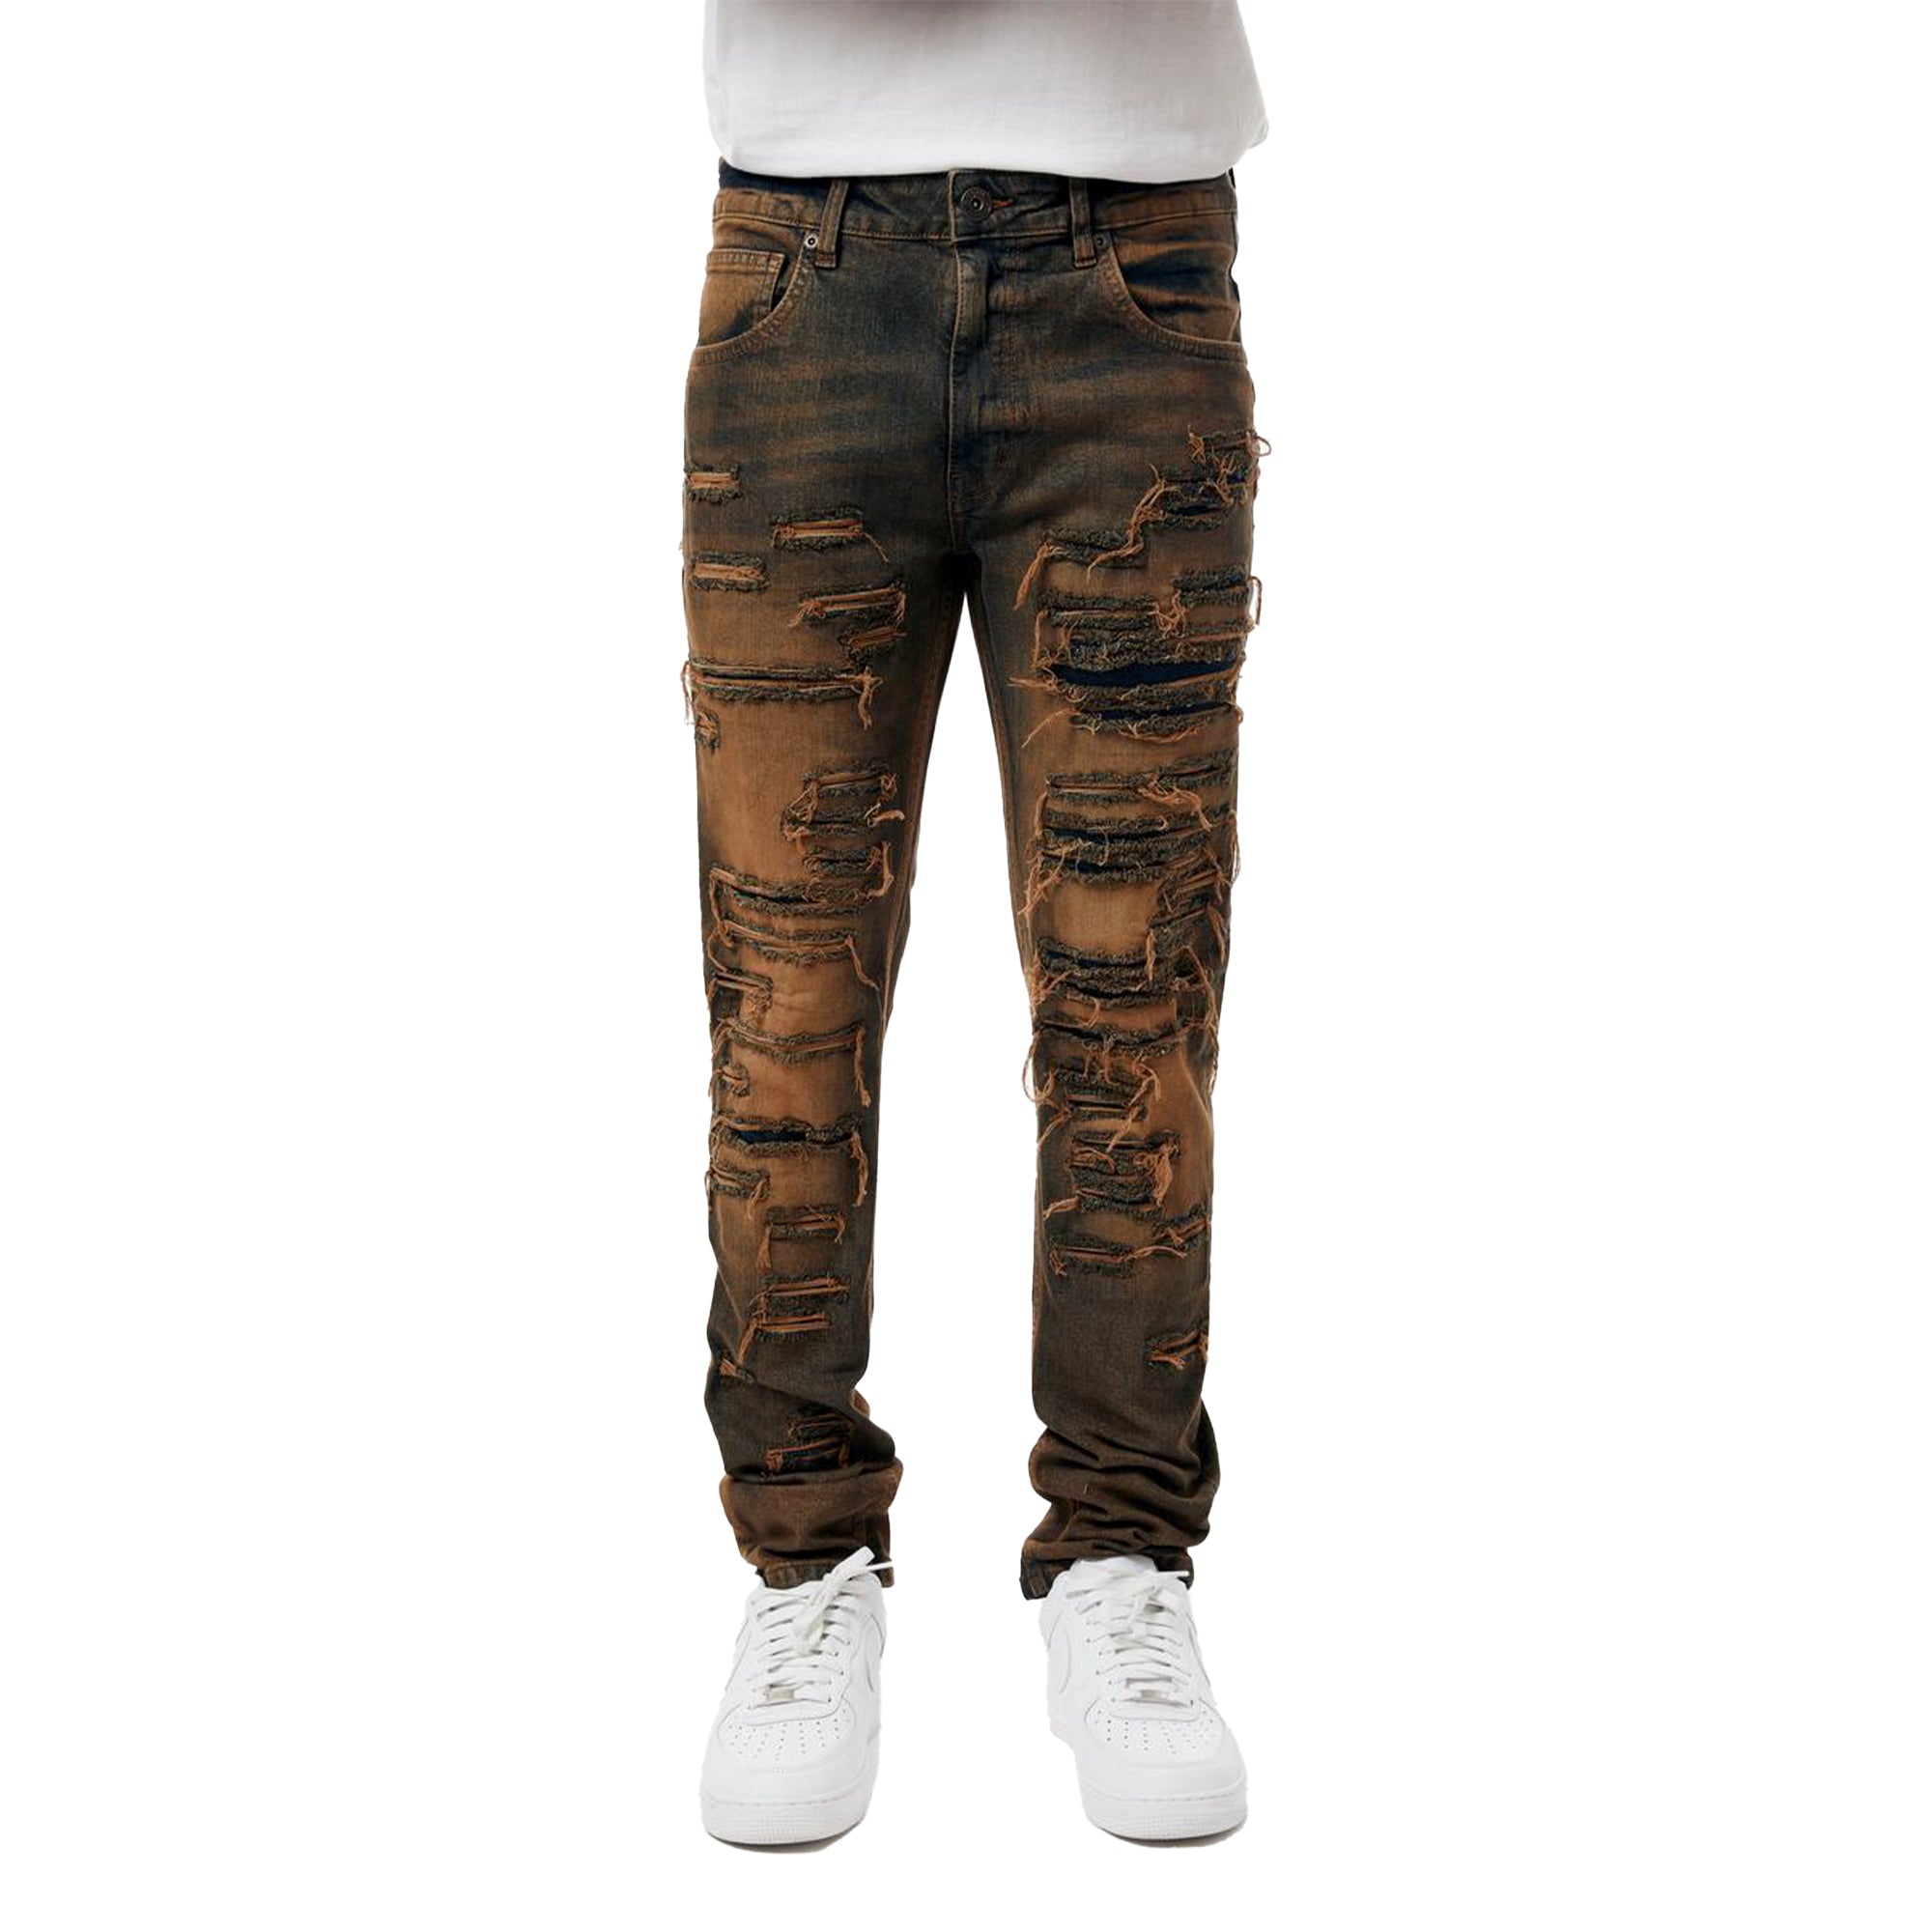 M. Society Men Skinny Fit Denim Jeans(Timber)-Timber-30W X 30L-Nexus Clothing